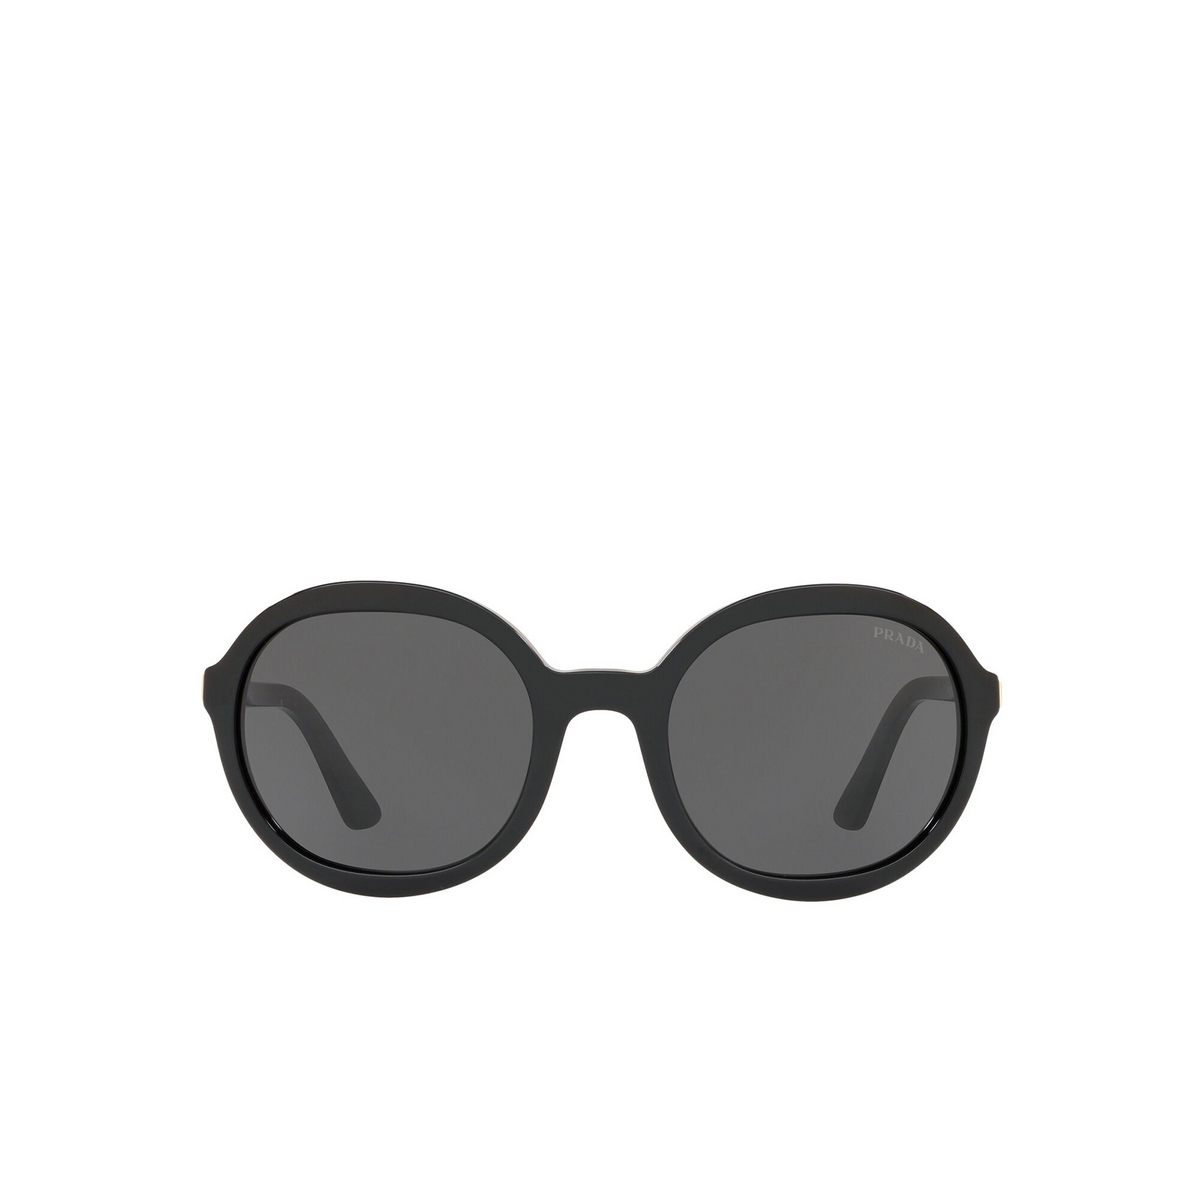 Prada® Oval Sunglasses: Heritage PR 09VS color Black 1AB5S0 - front view.